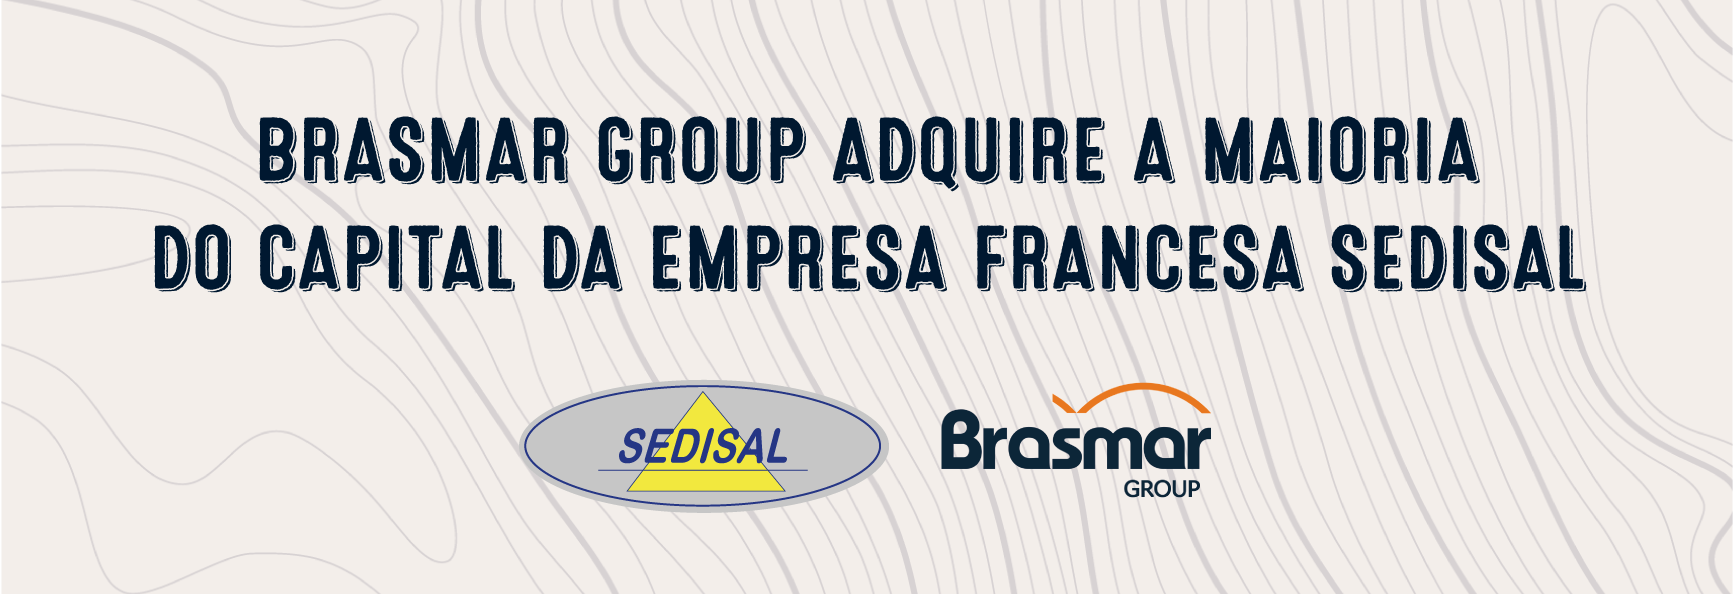 Brasmar Group adquire a maioria do capital da empresa francesa Sedisal